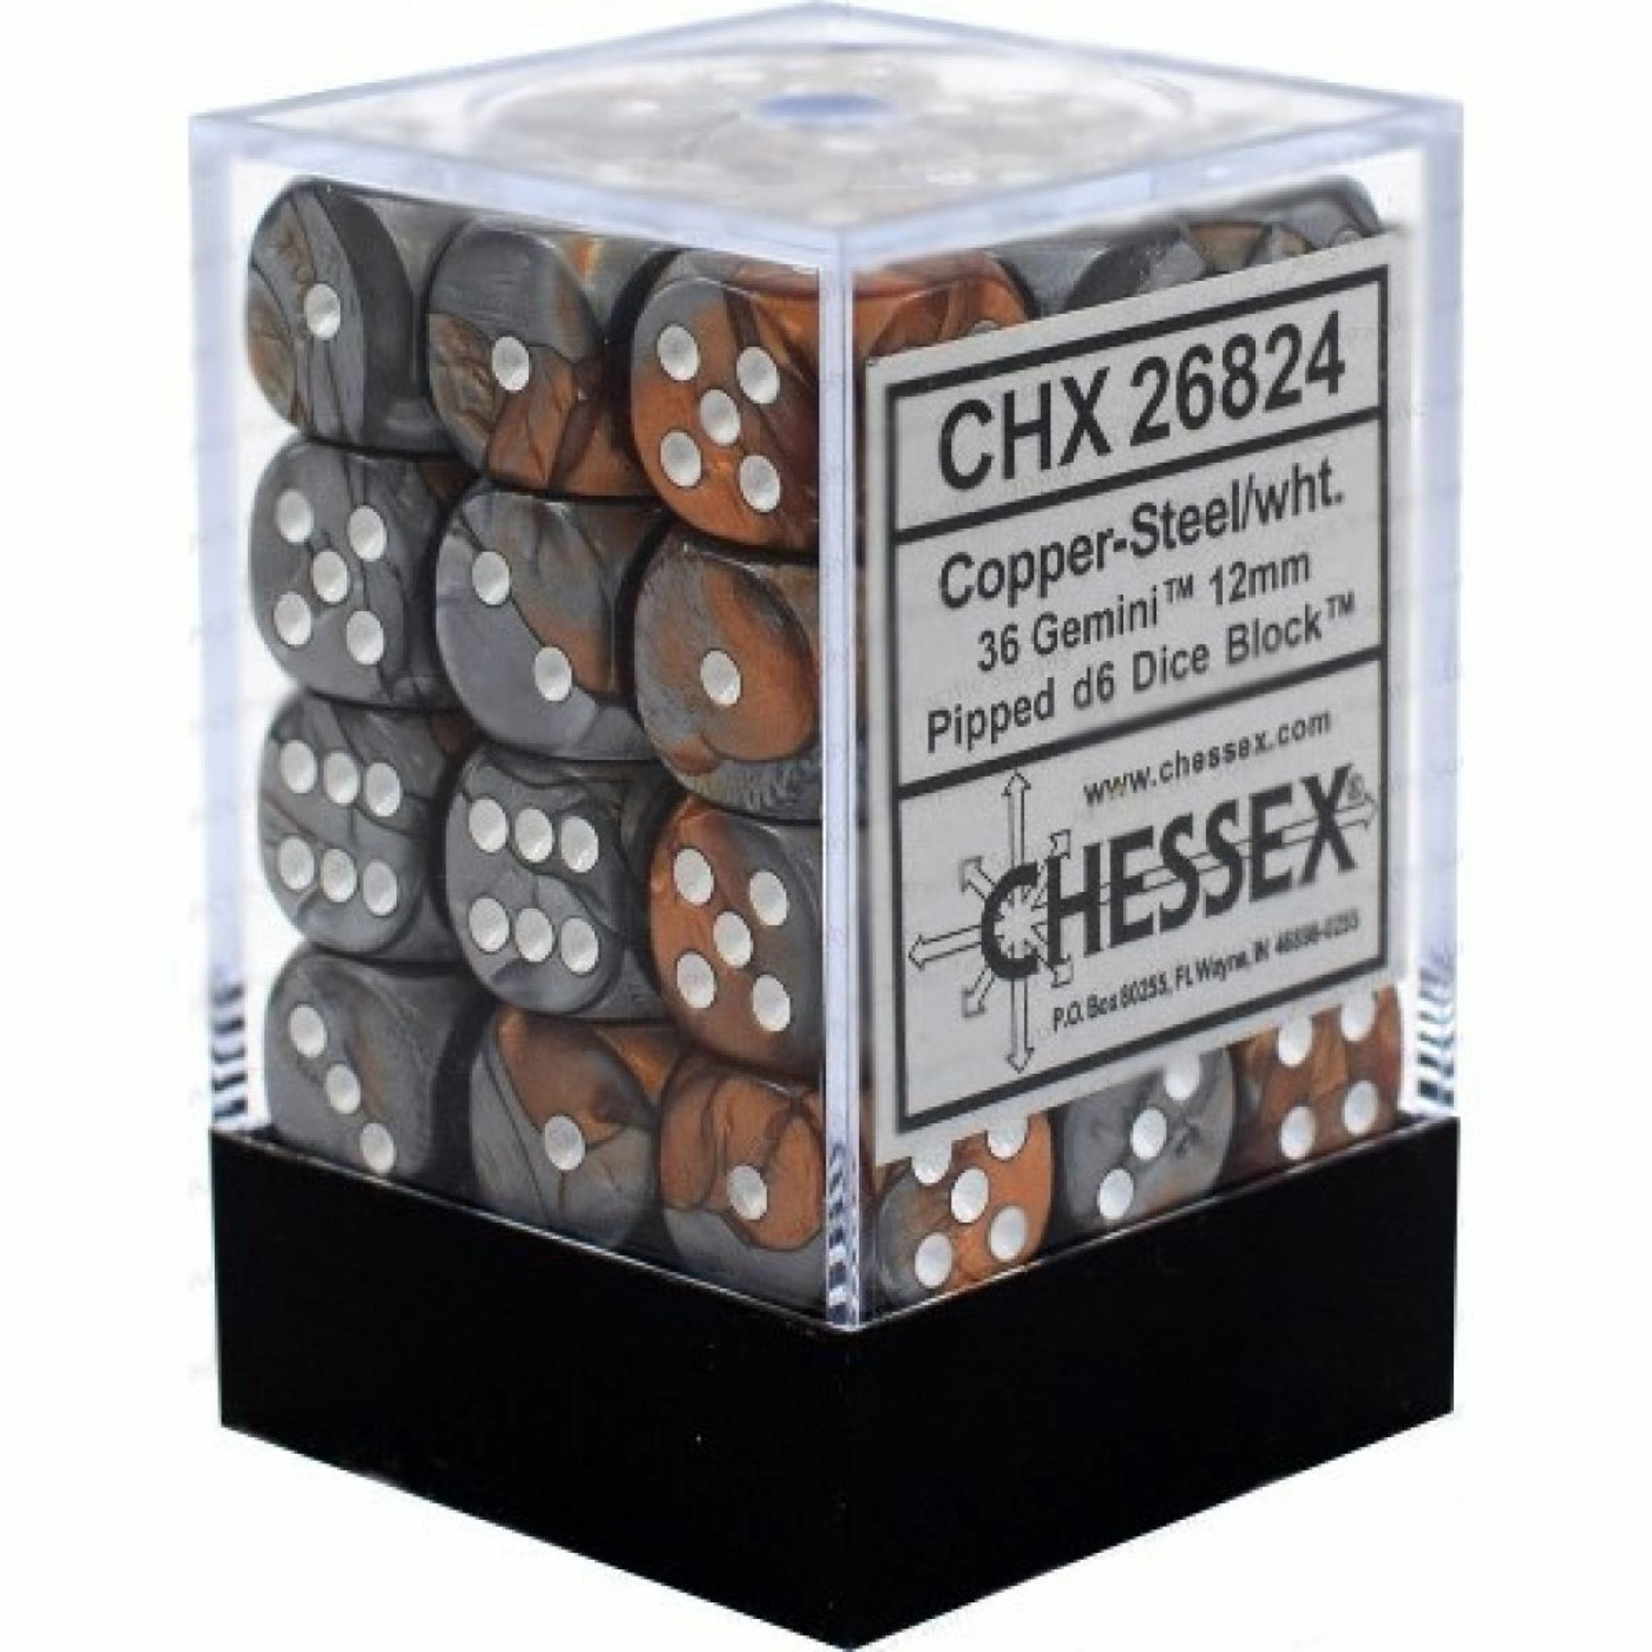 Chessex Gemini 12mm d6 Copper-Steel white Dice (36)